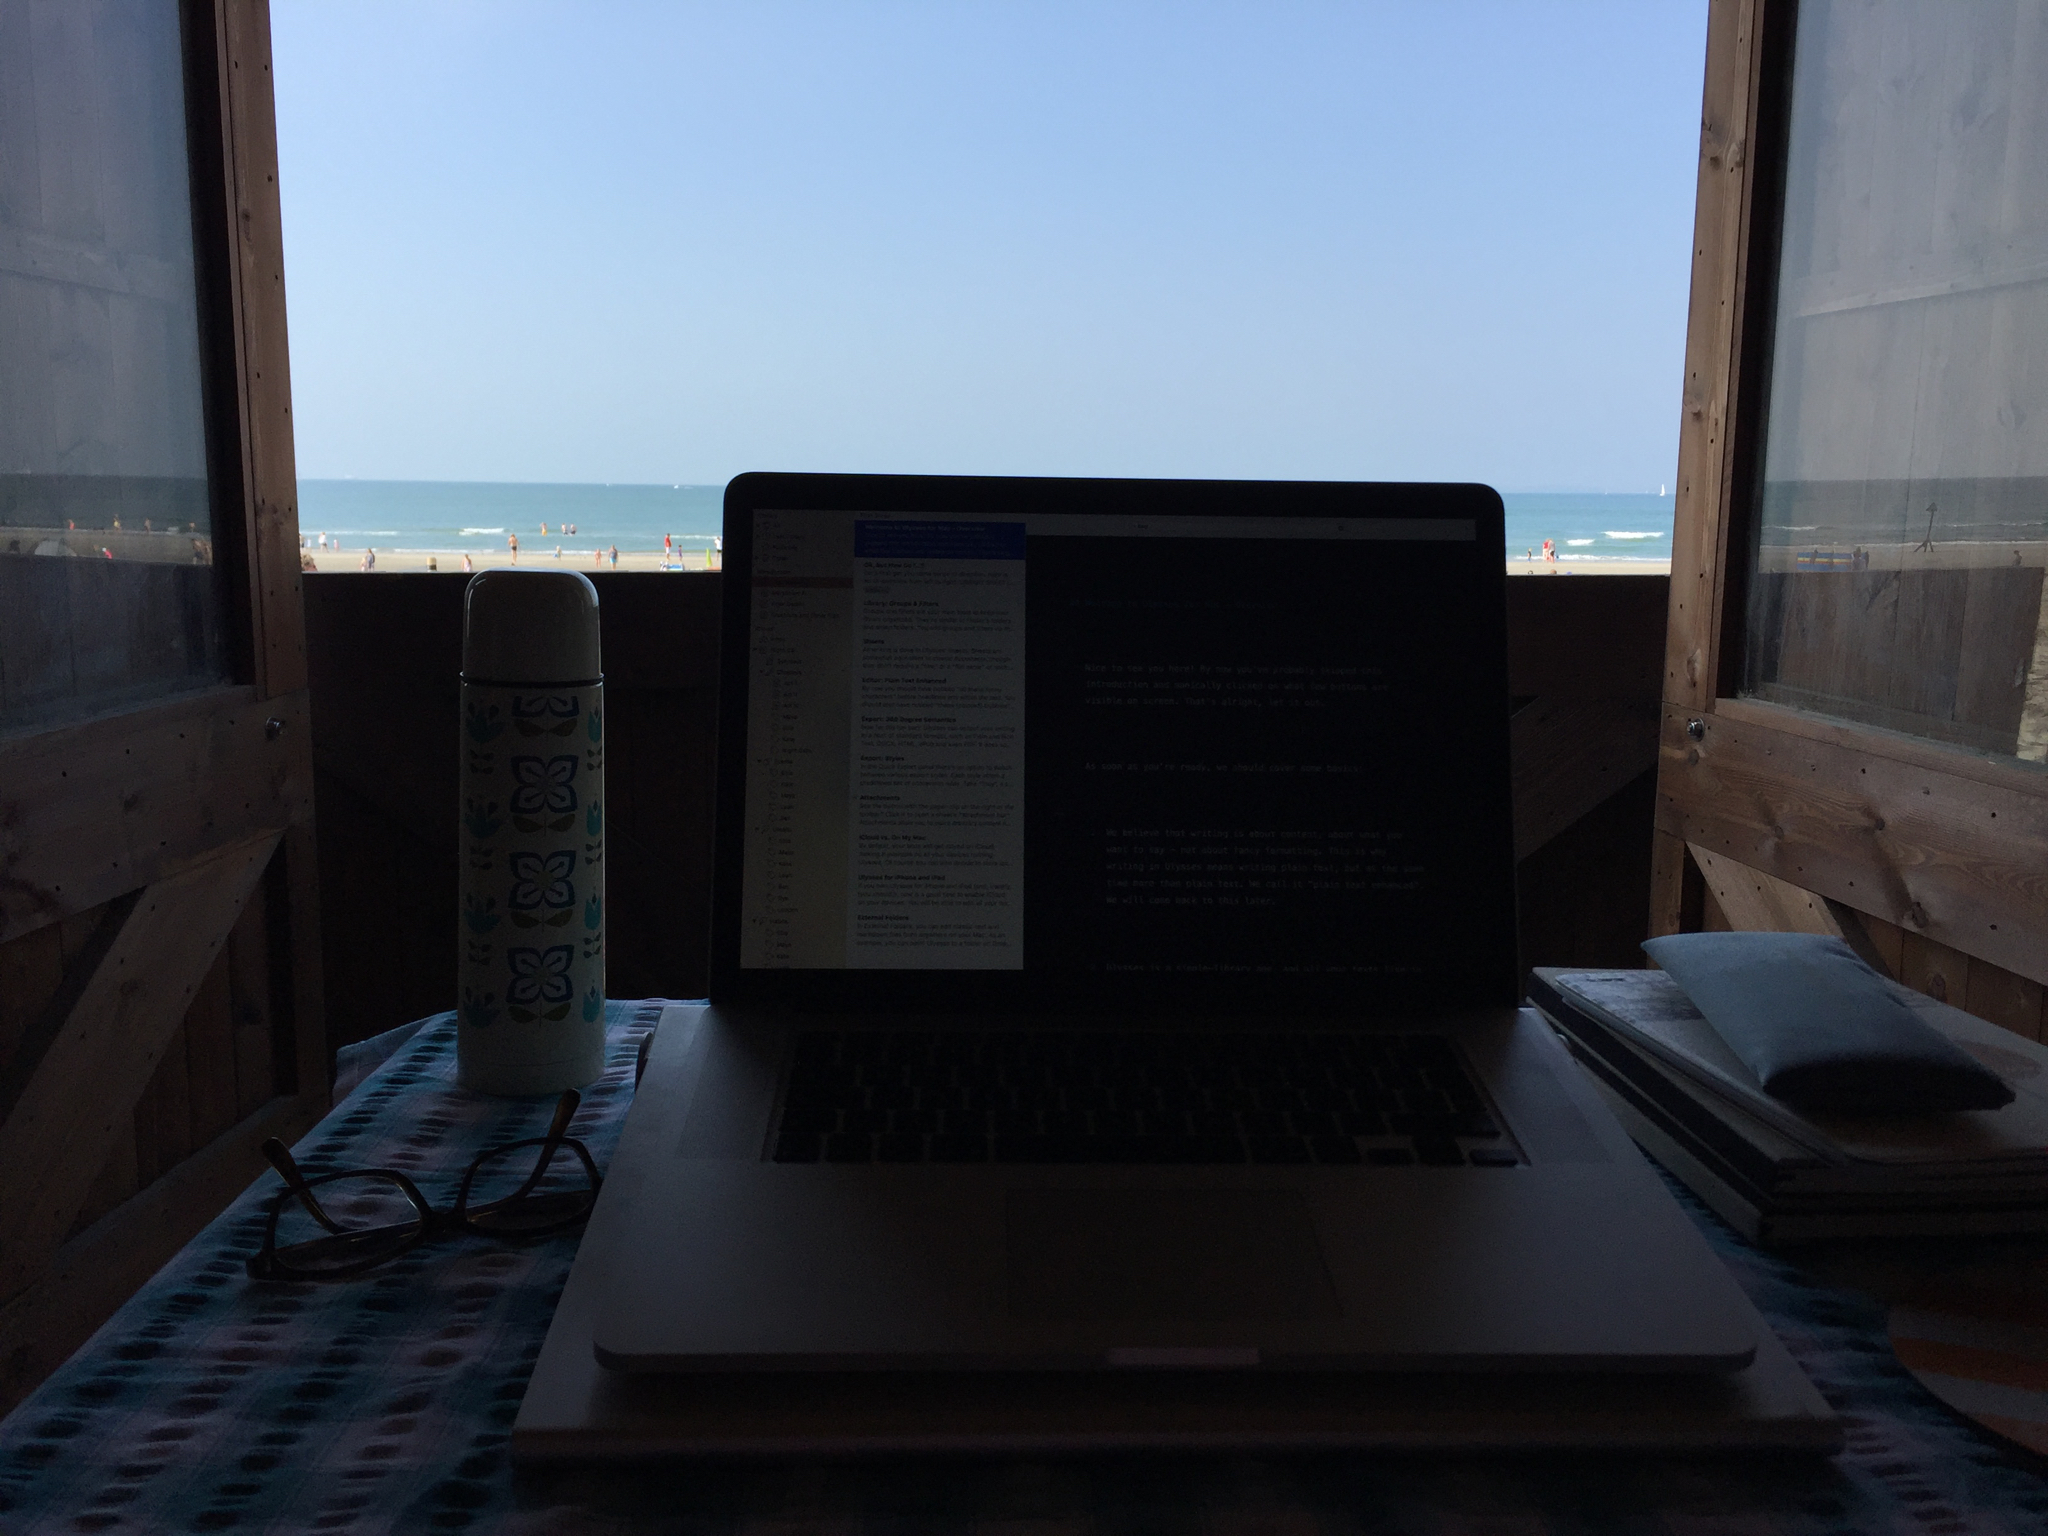 Beach hut with laptop